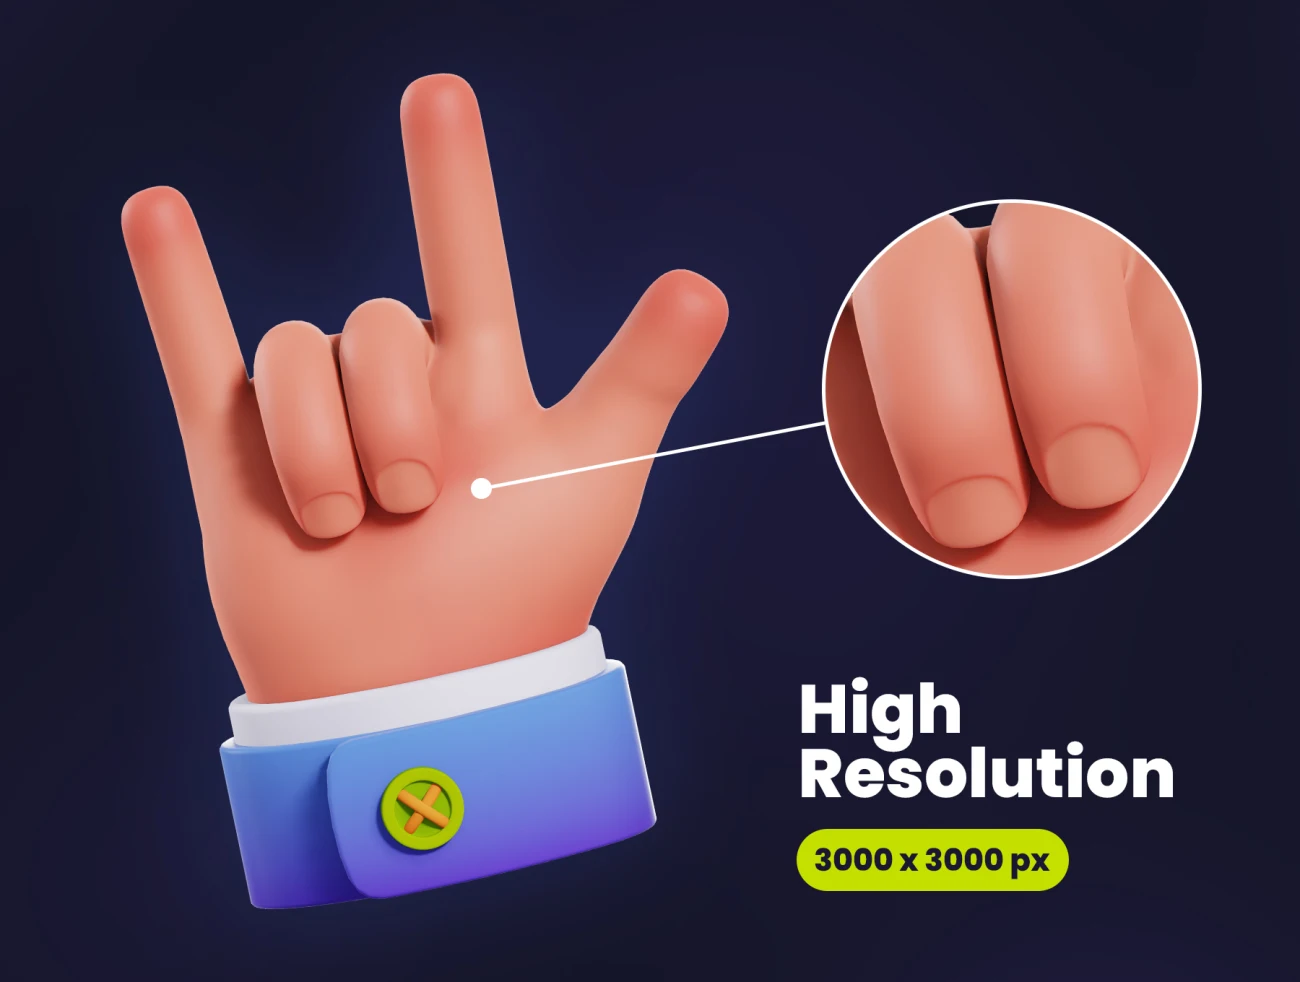 40款不同手势3D模型设计素材 Hand Gestures 3D Illustration .blender .psd .xd .figma插图3